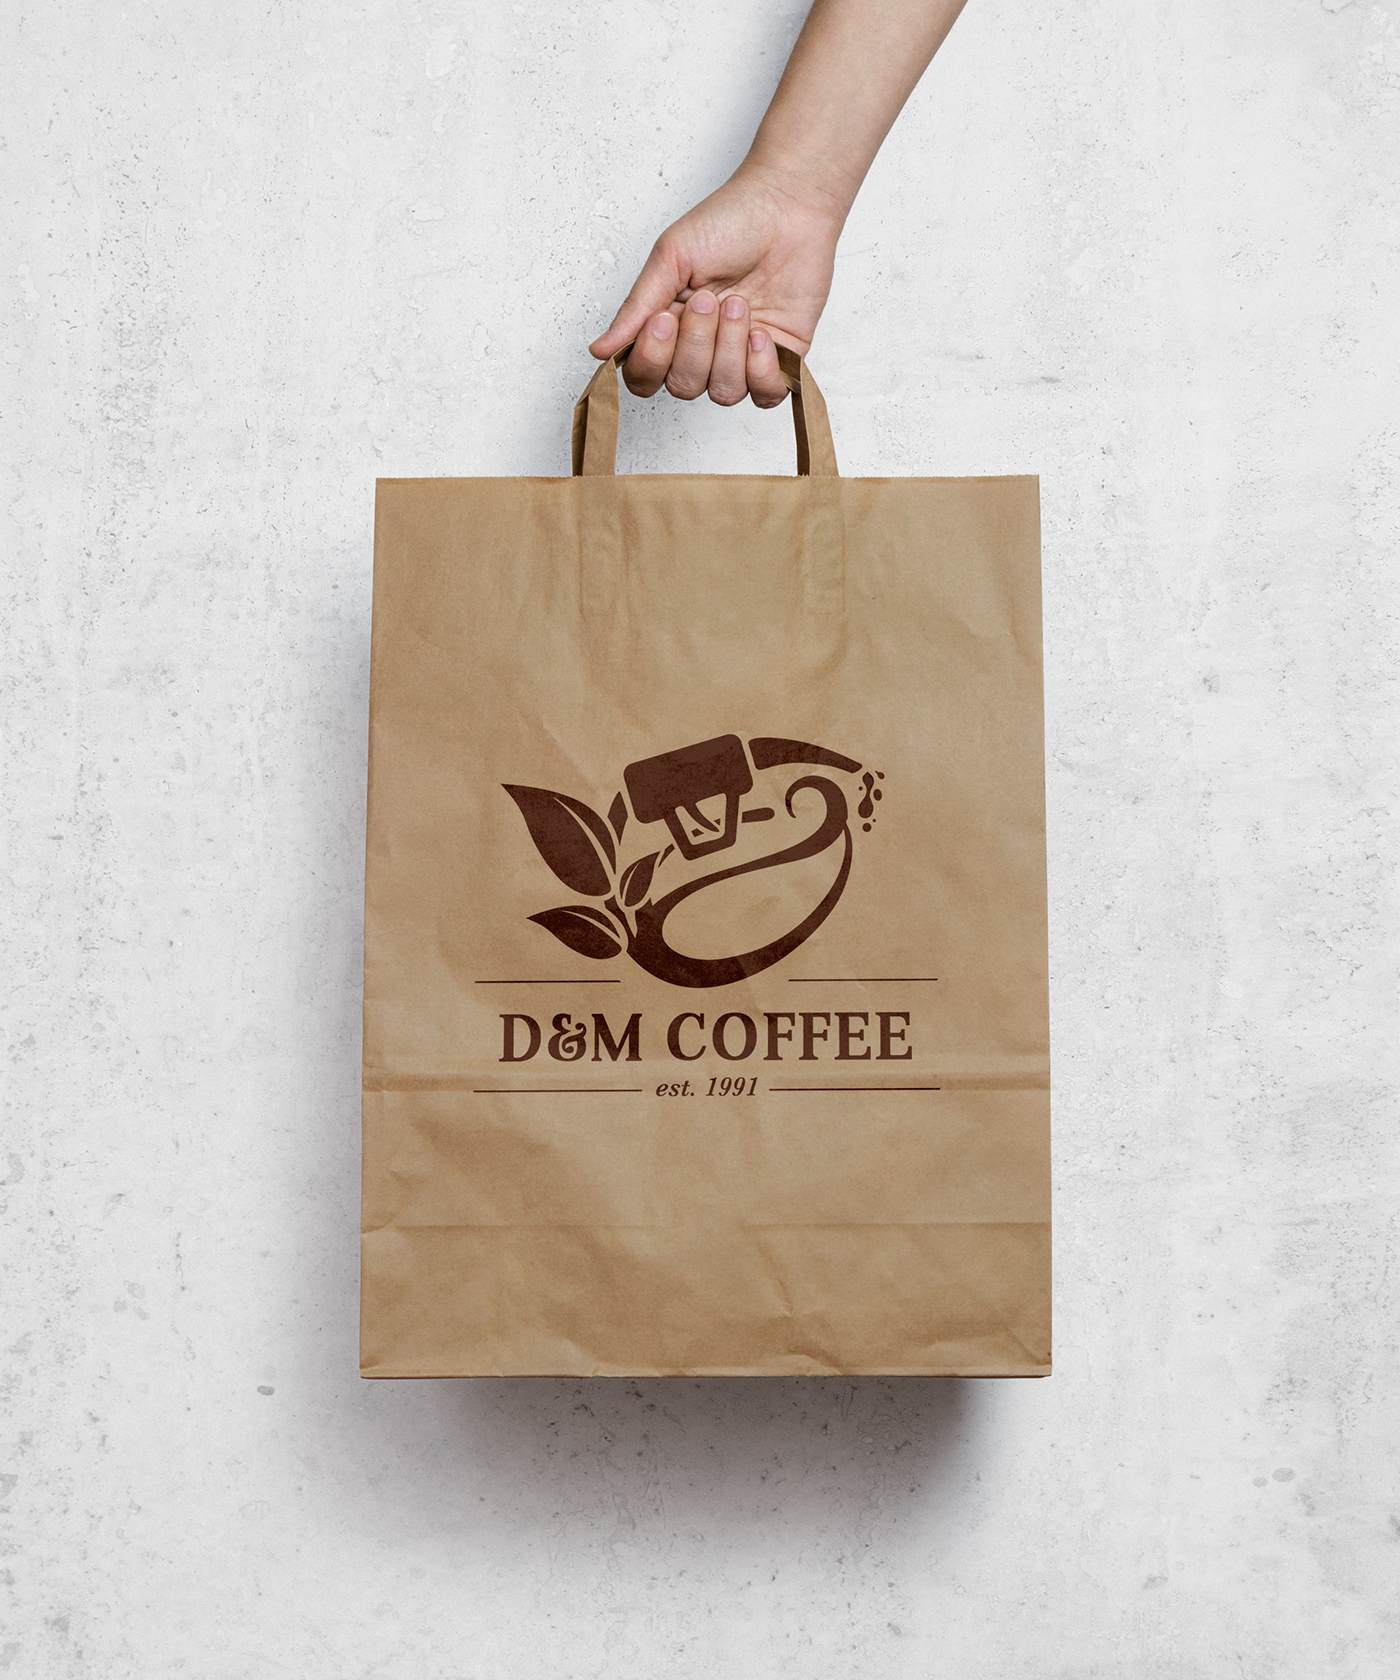 D&M Coffee Coffee cafe fresh rebranding